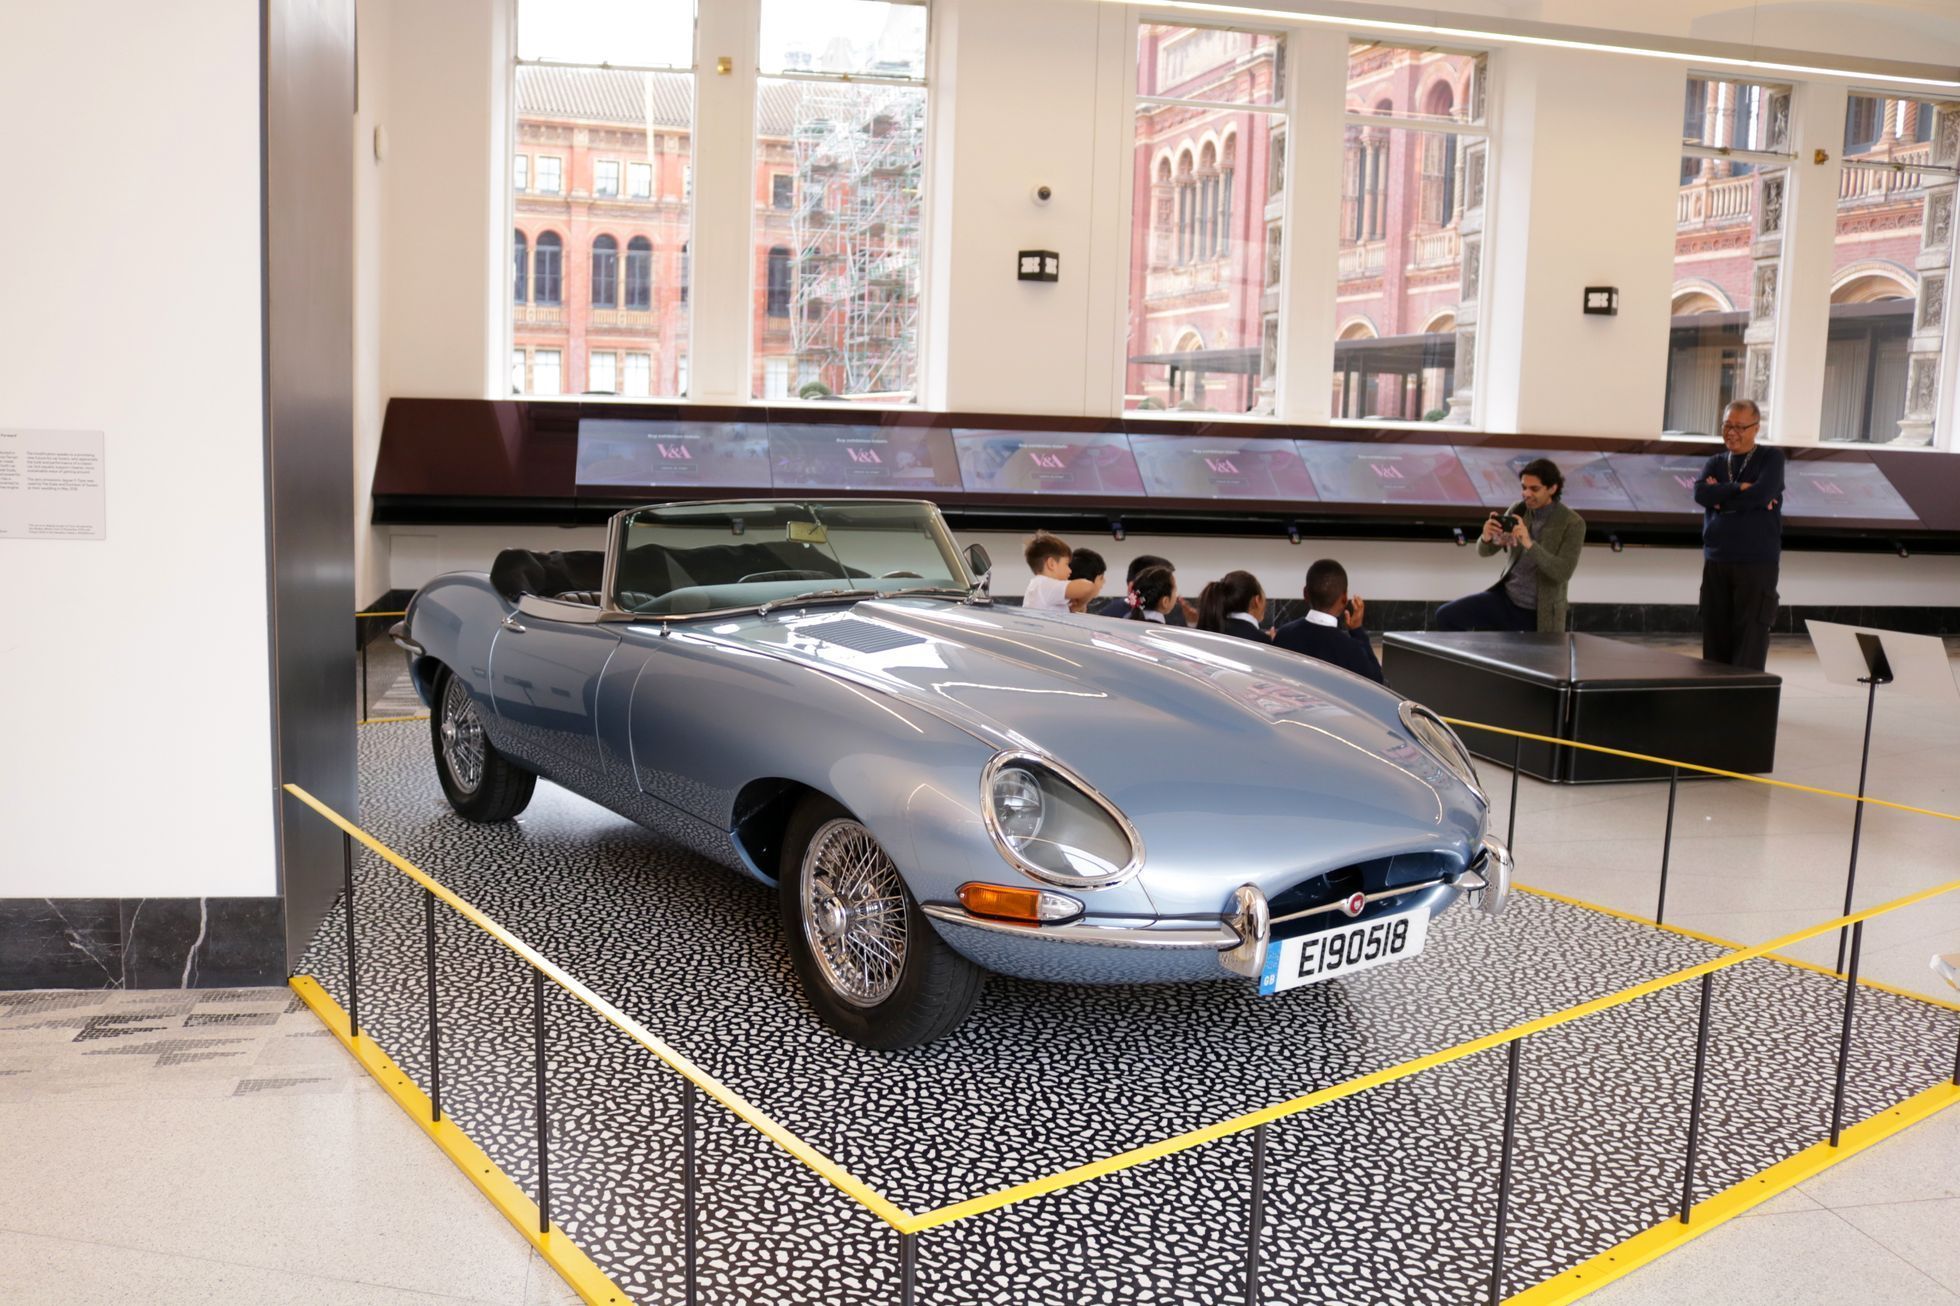 Výstava Cars Londýn V&A Museum 2019